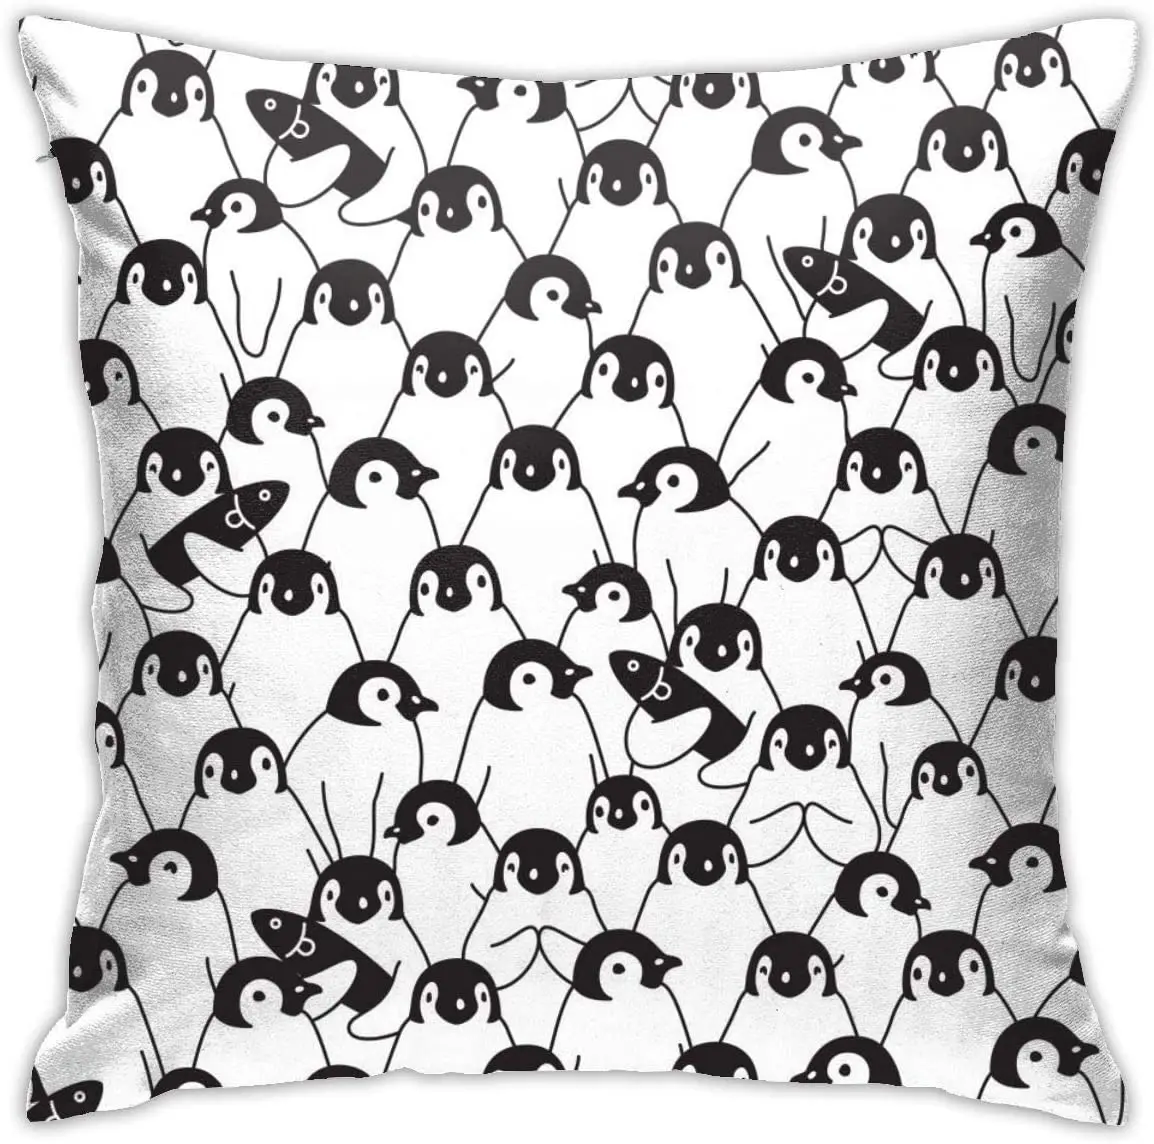 

Penguin Bird Throw Pillow Covers 18"" X 18"" Inch Square Decorative Pillowcase Pillow Cover Cushion